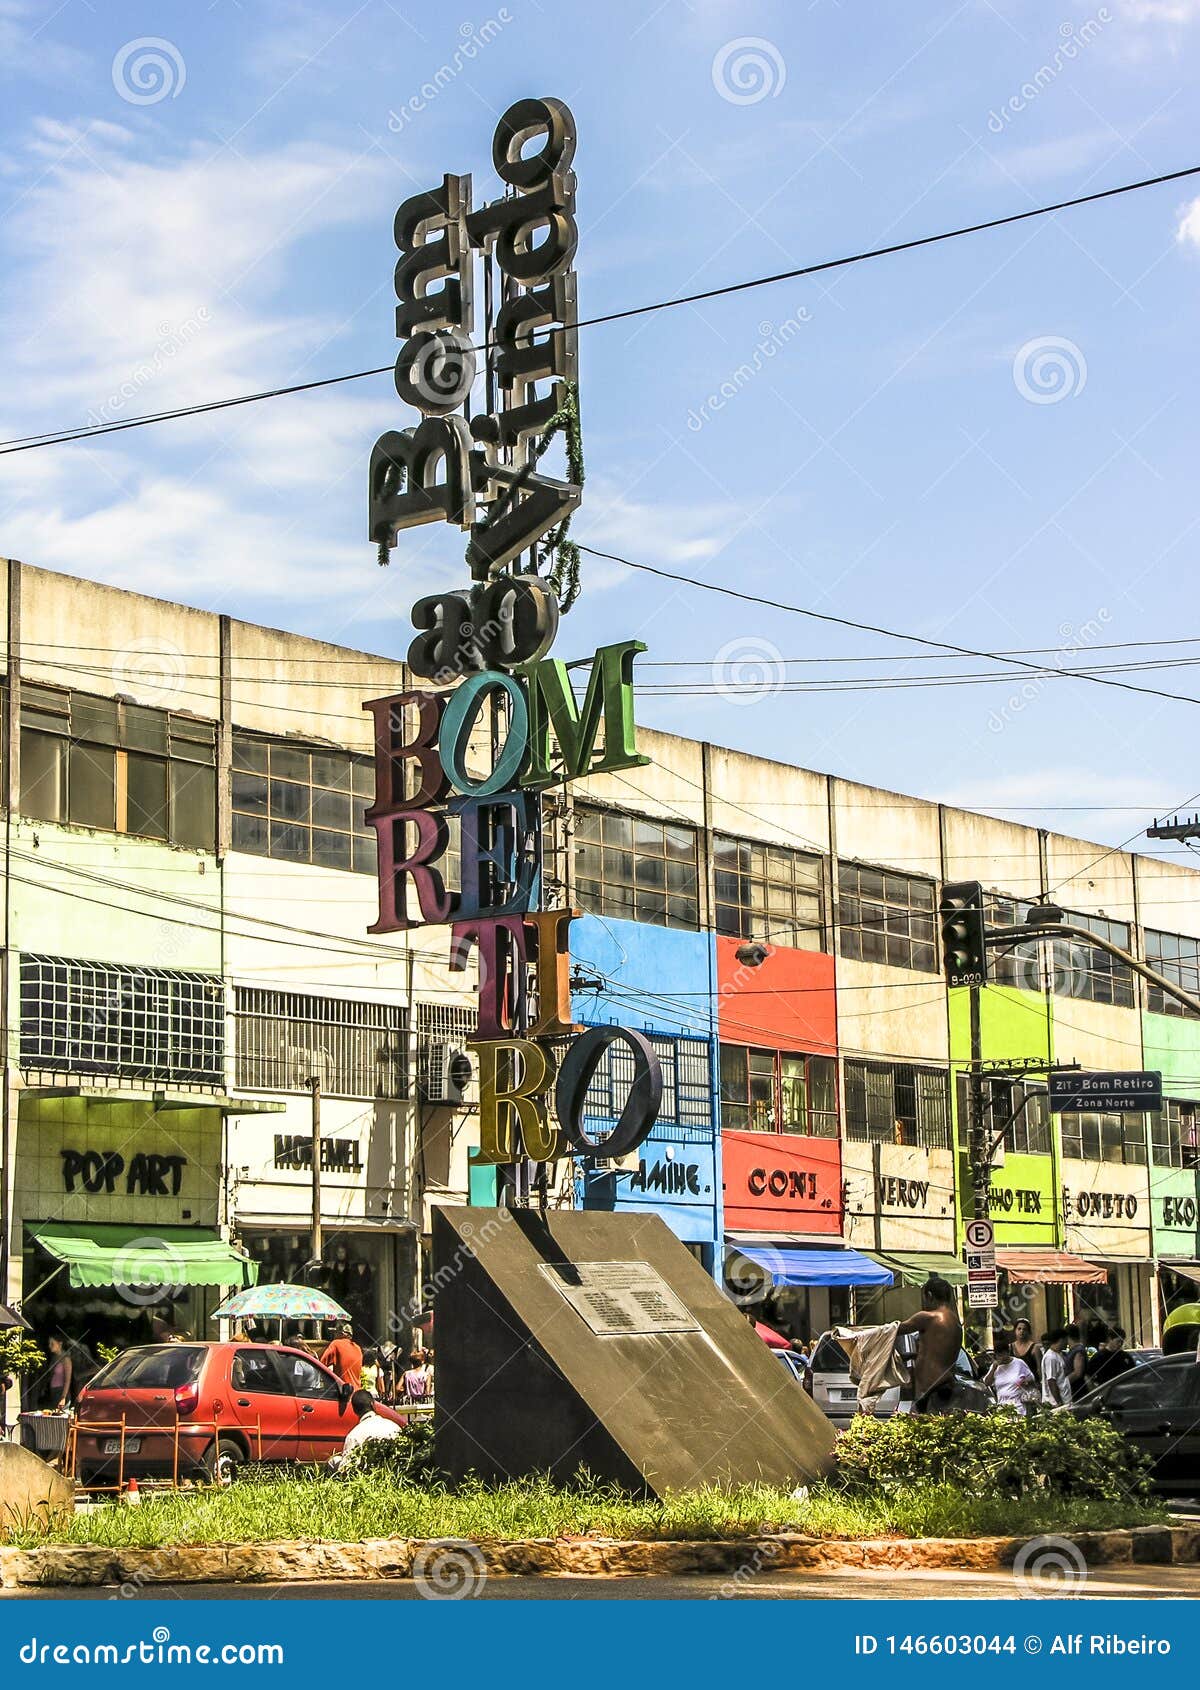 https://thumbs.dreamstime.com/z/totem-welcome-bom-retiro-entrance-neighborhood-sao-paulo-brazil-march-totem-welcome-bom-retiro-entrance-146603044.jpg